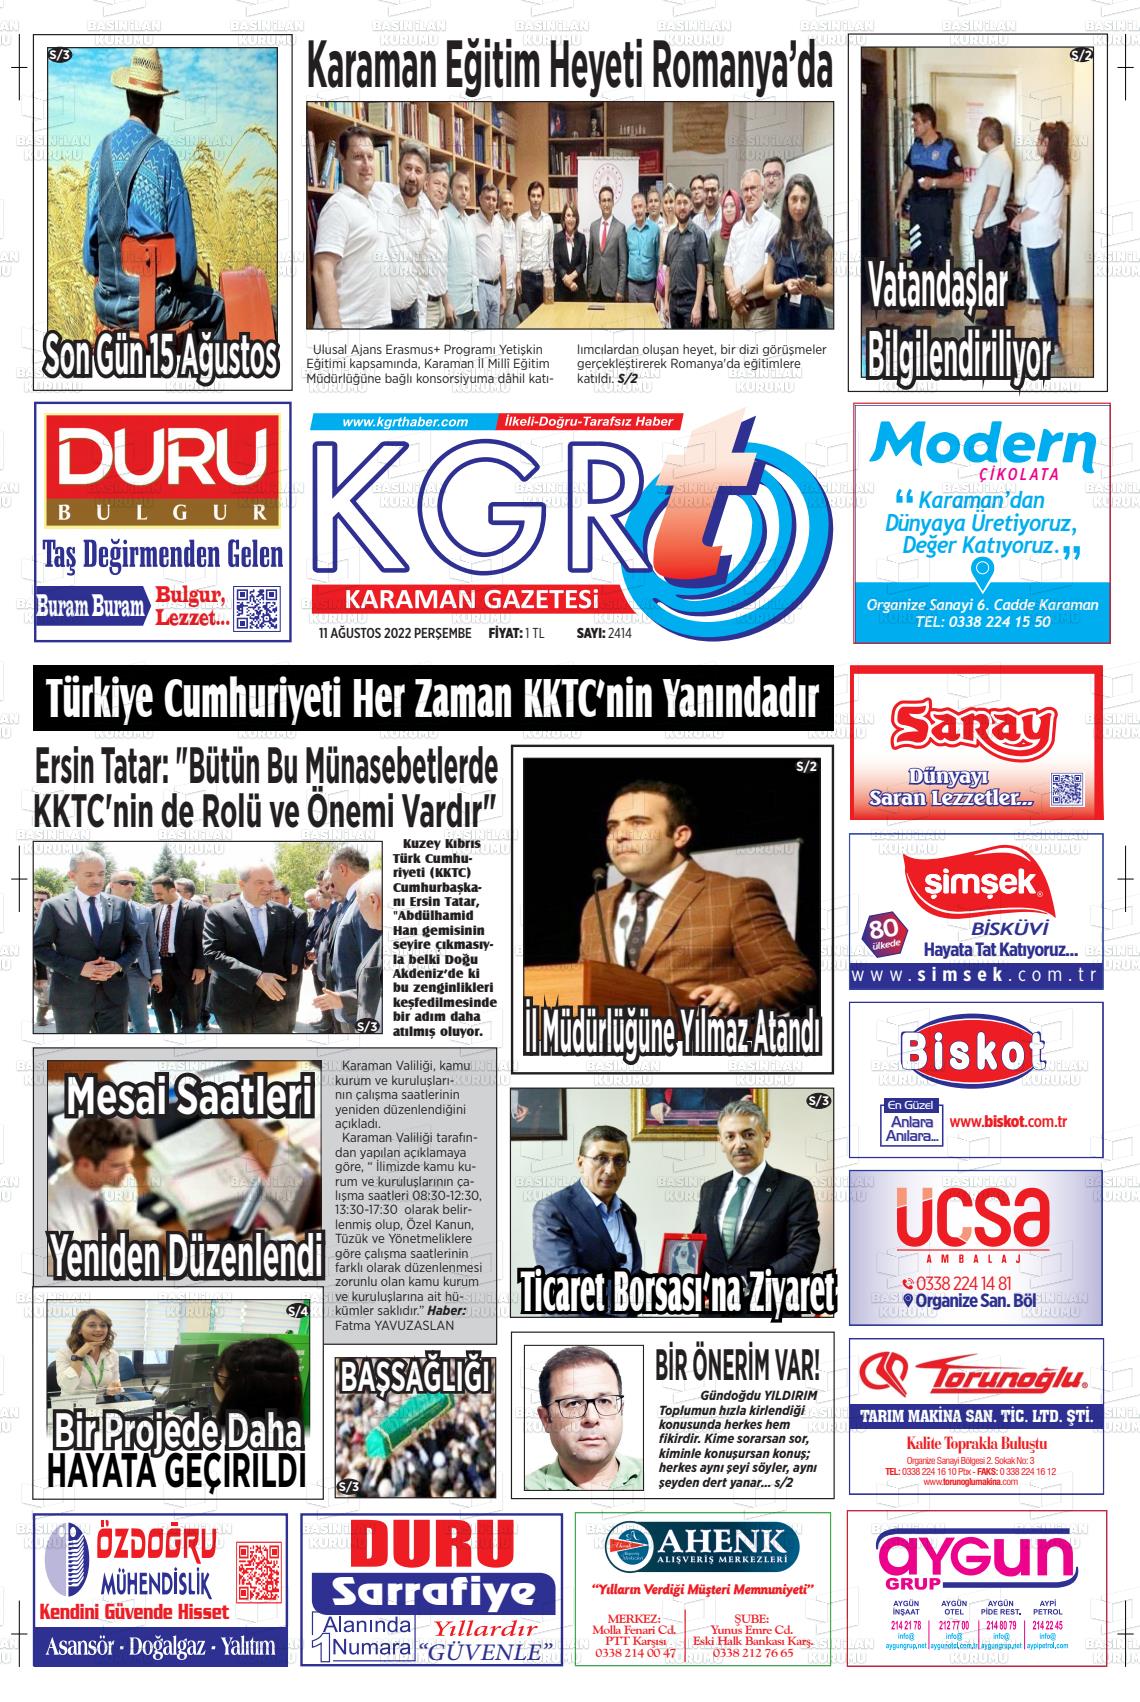 11 Ağustos 2022 Kgrt Karaman Gazete Manşeti